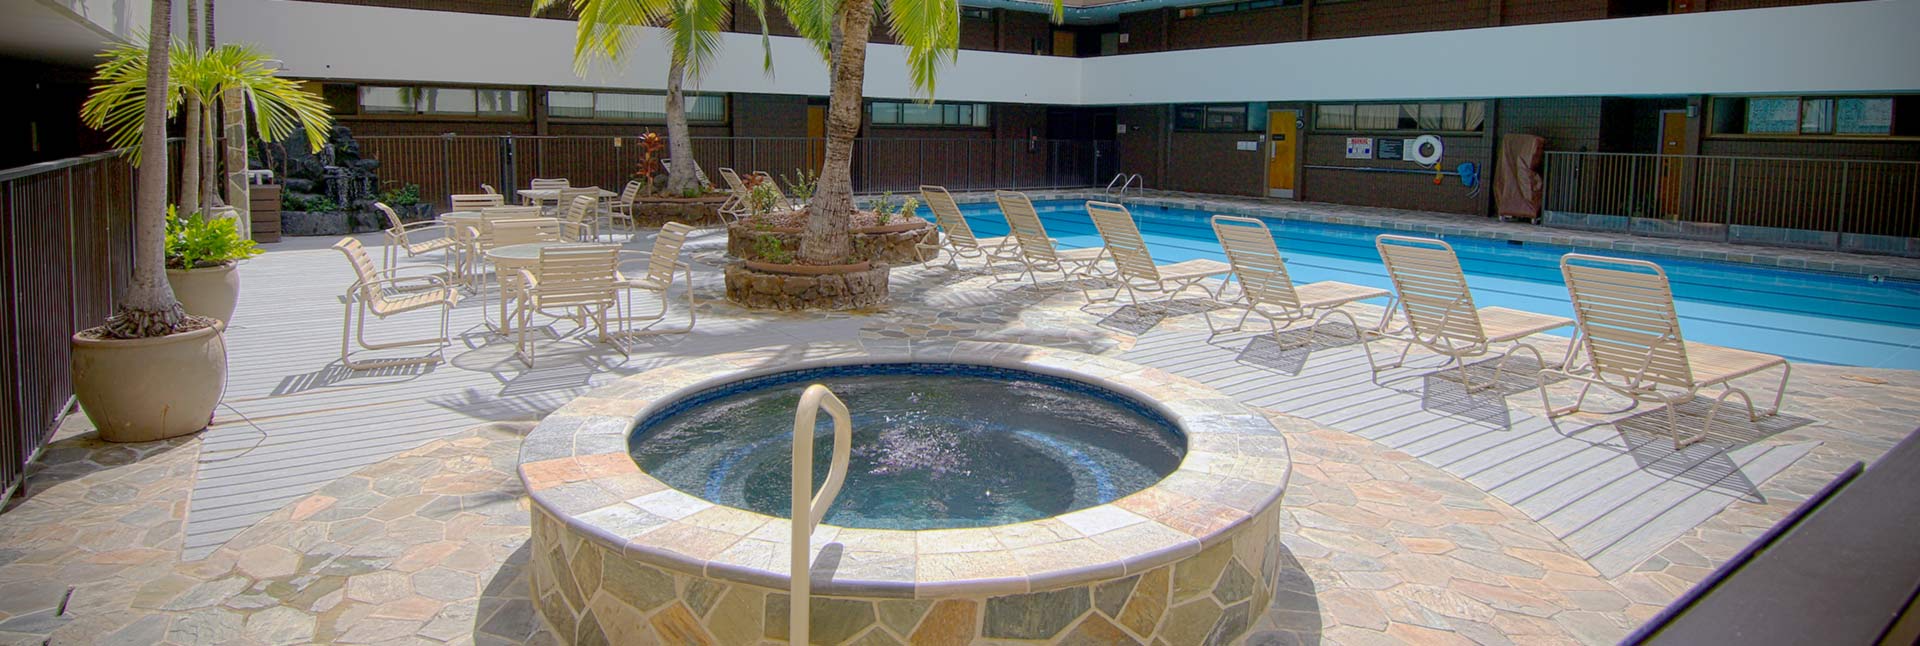 Pool at Aston at the Executive Centre Hotel